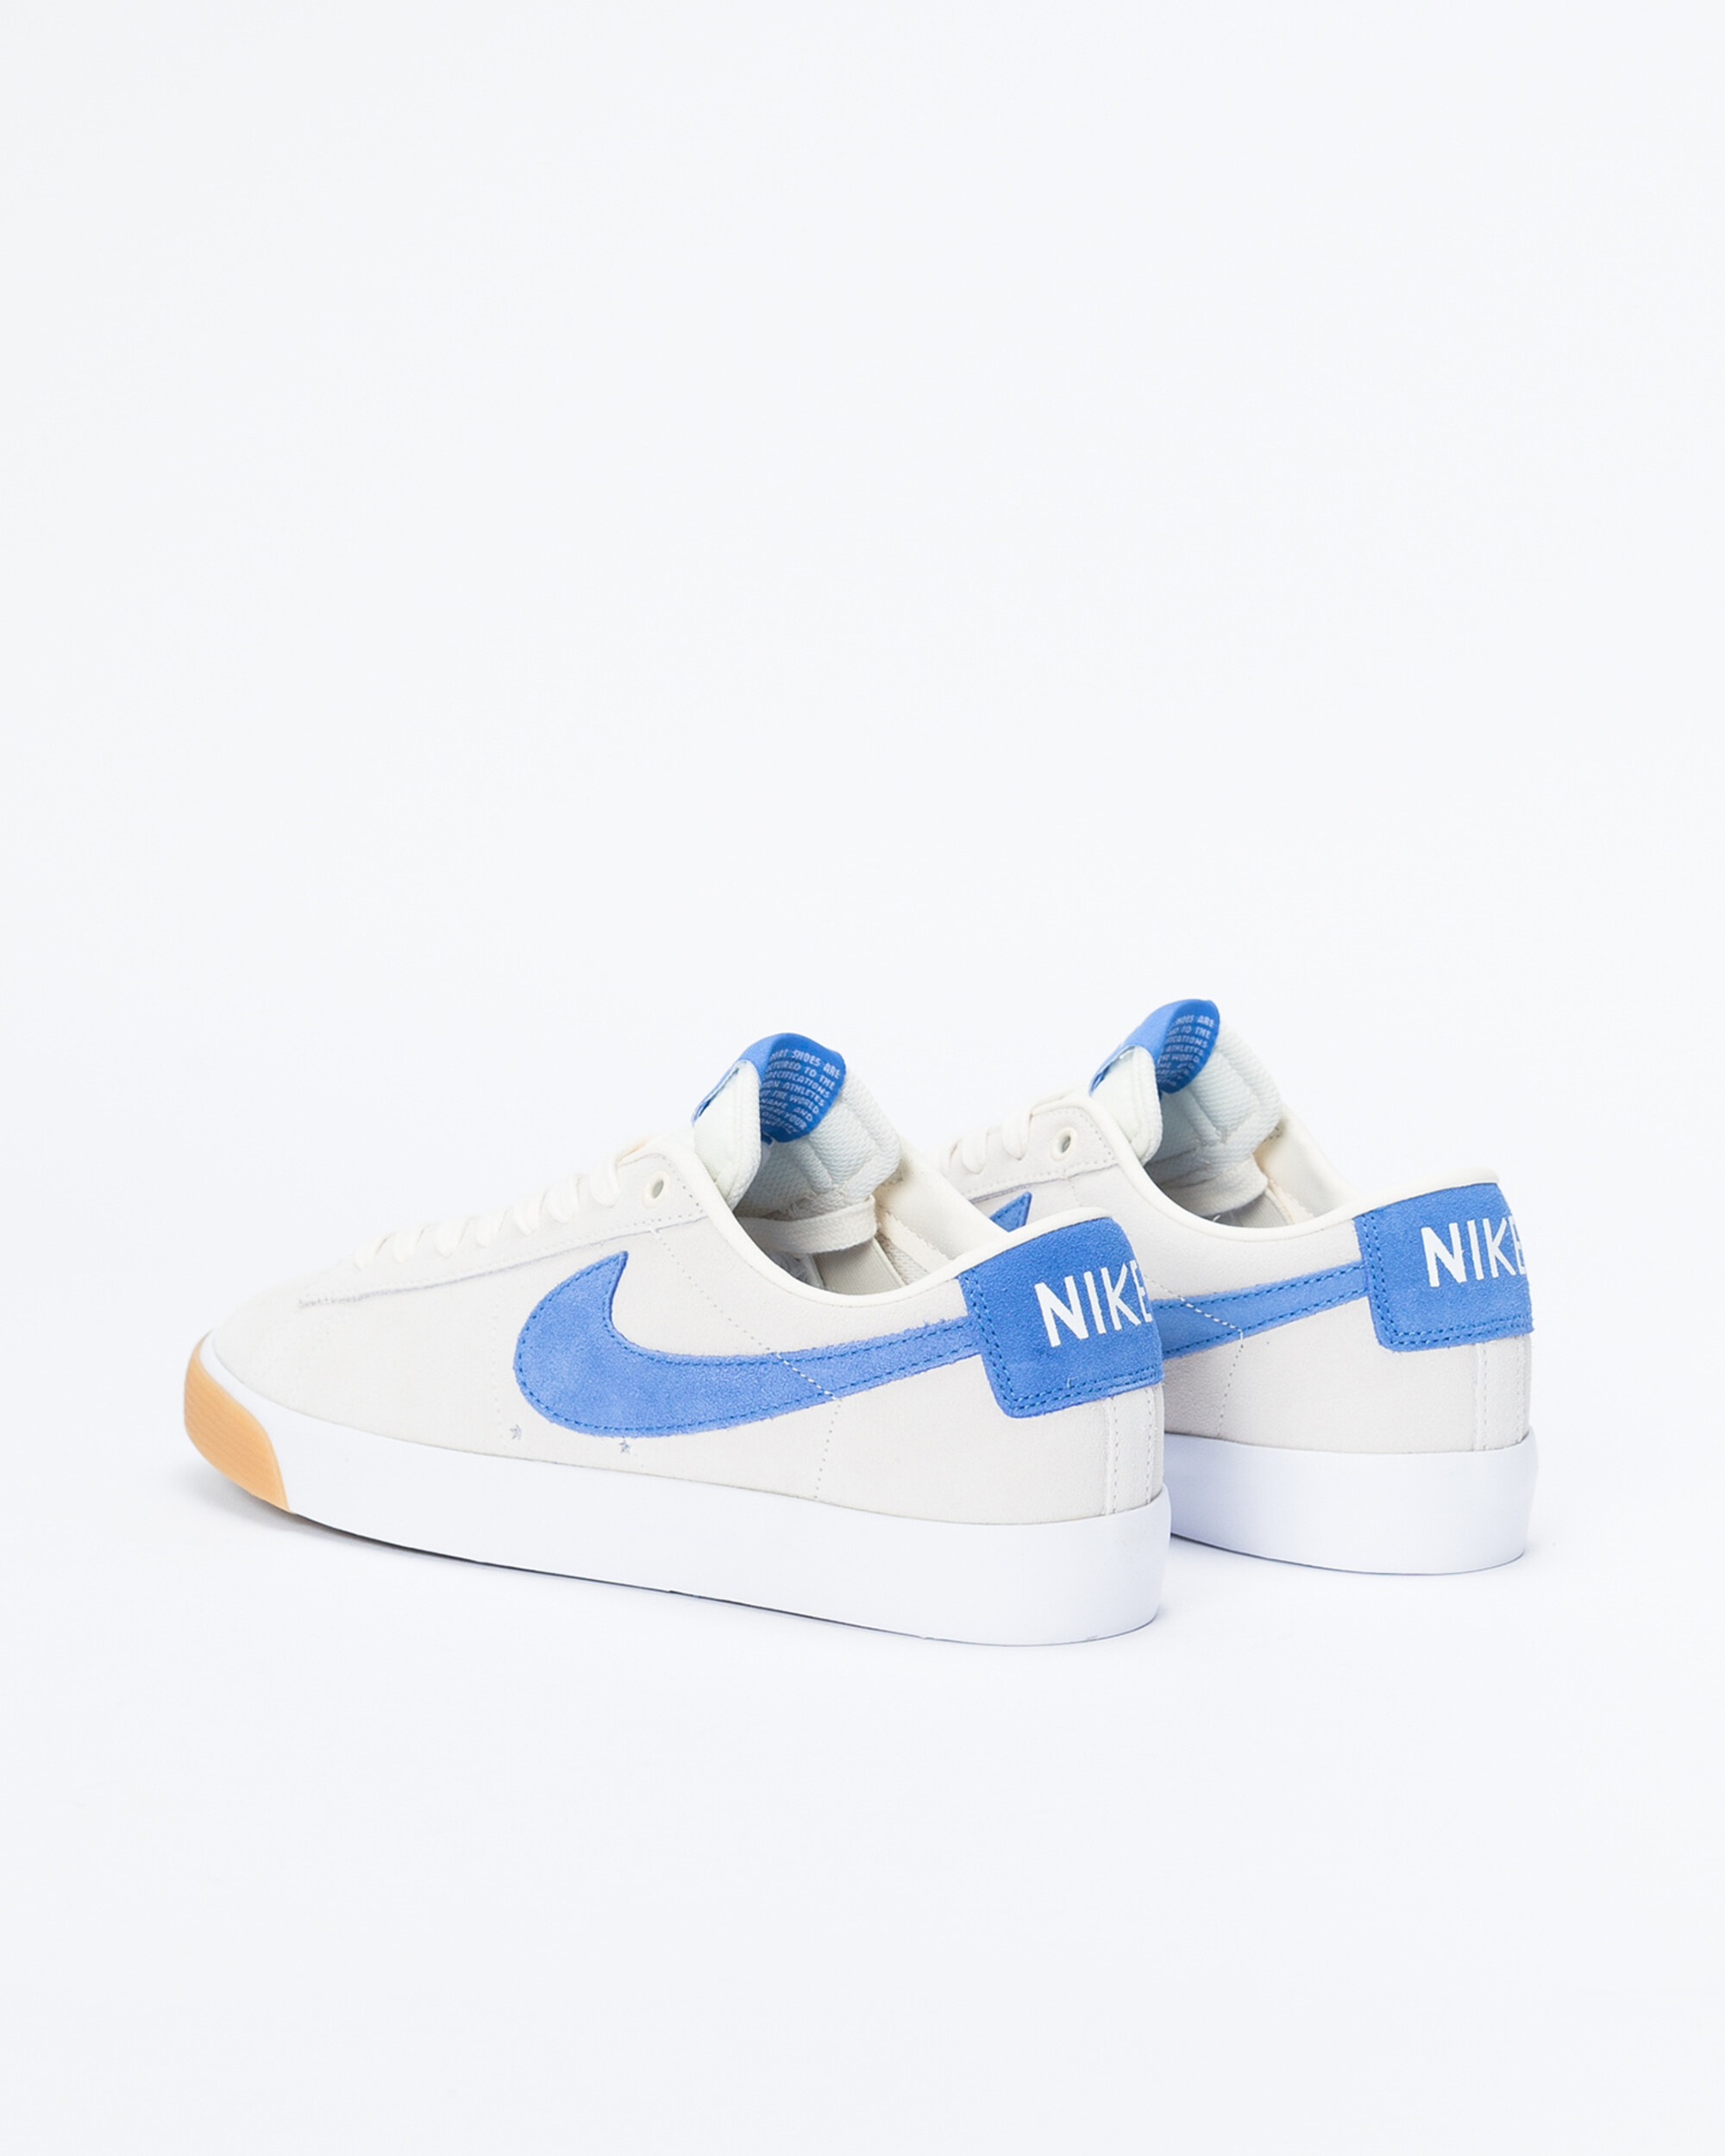 Nike Sb Blazer Low Gt Pale Ivory/Pacific Blue-White